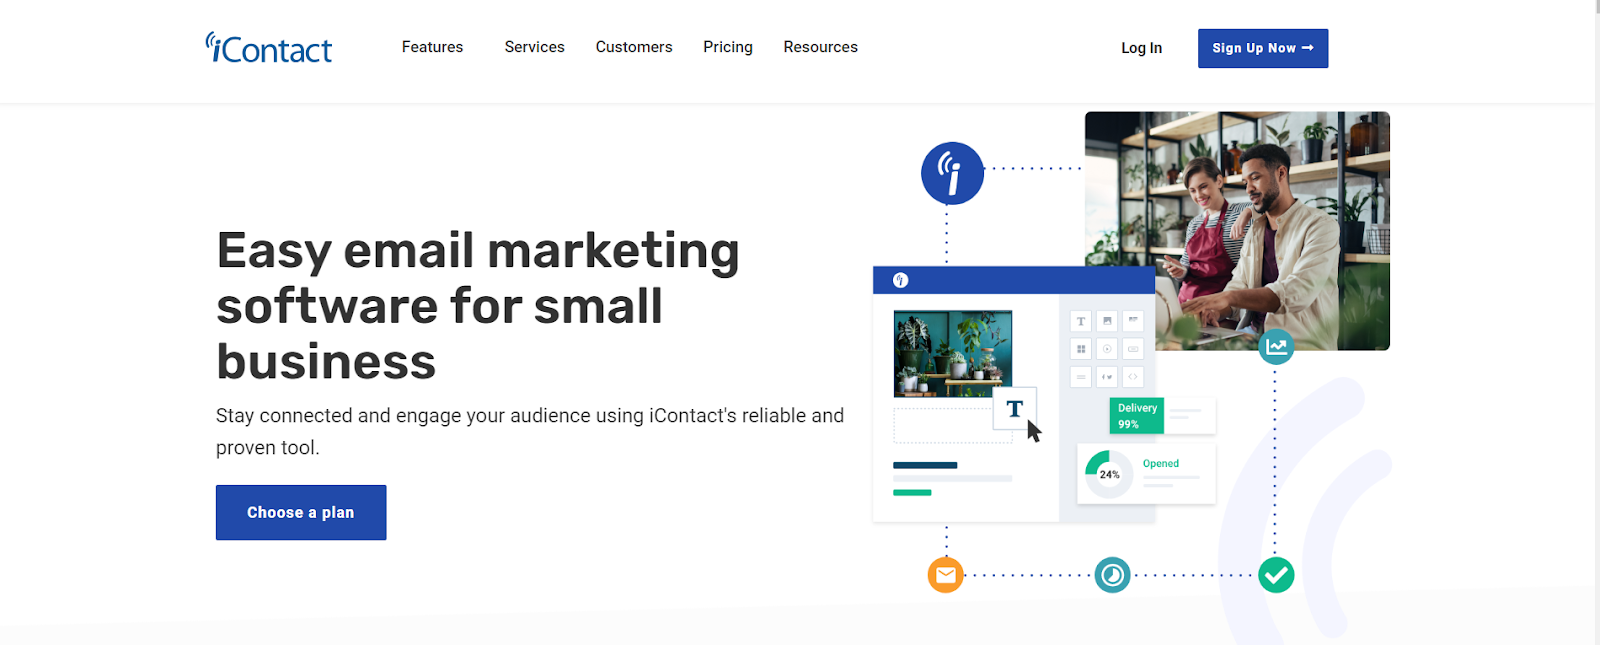 icontact email marketing platform homepage